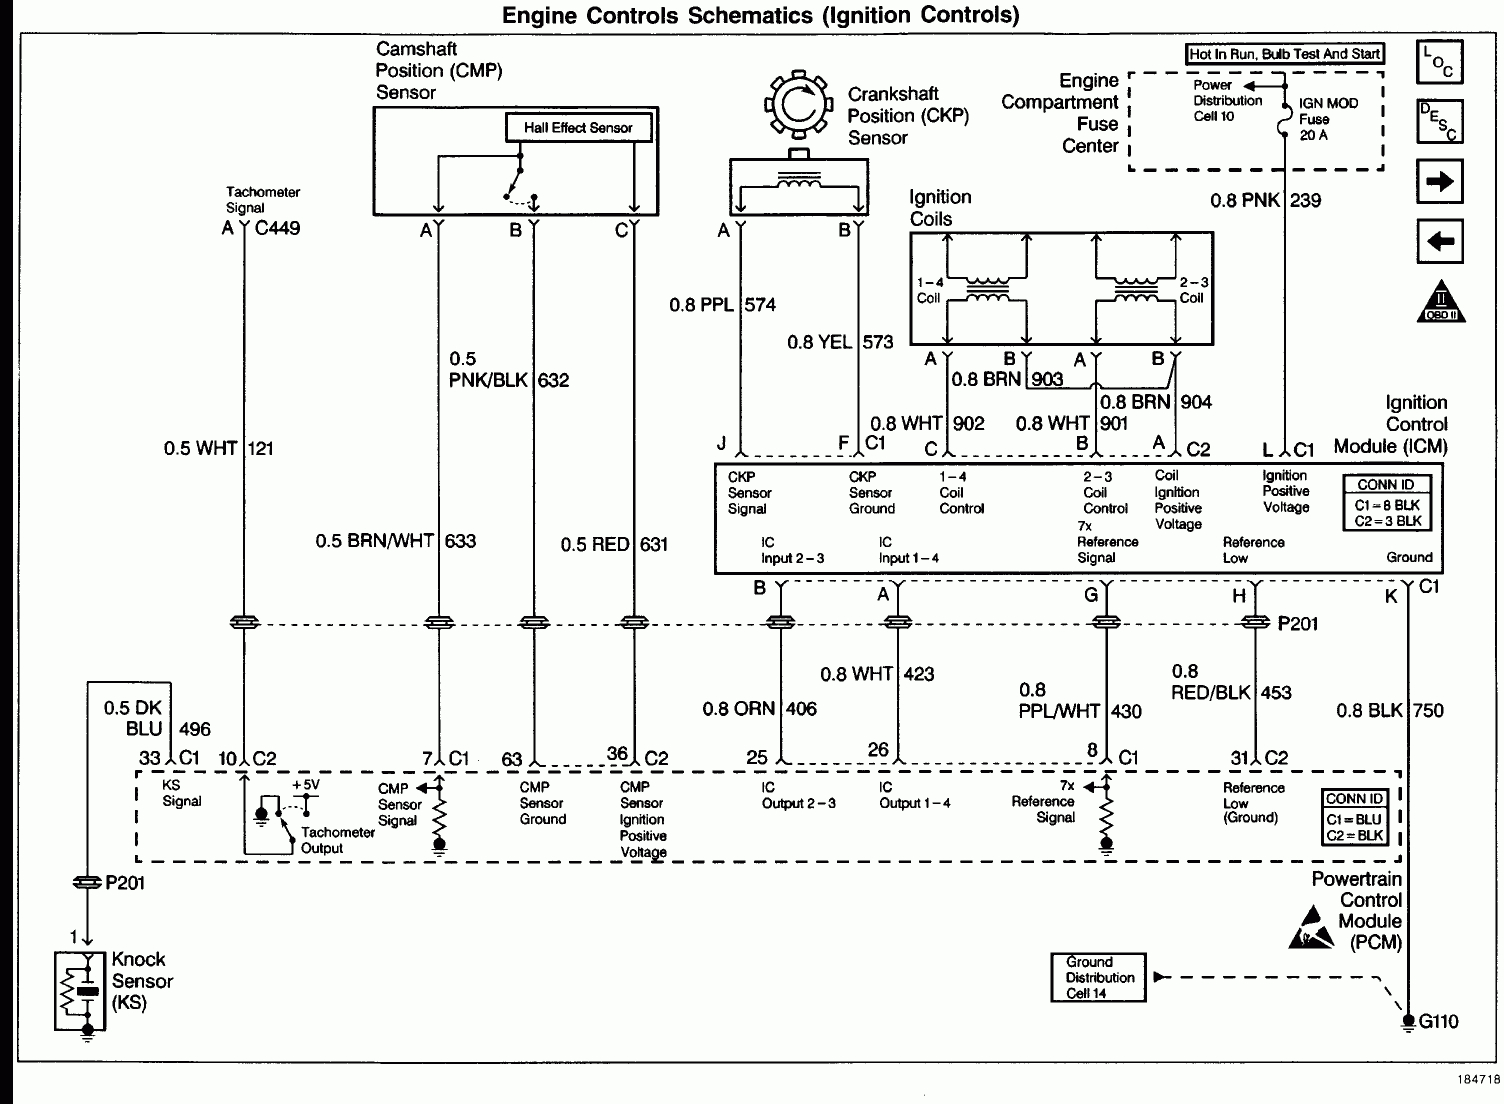 Gm G6 Wiring Diagram | Best Wiring Library - 2006 Pt Cruiser Cooling Fan Wiring Diagram